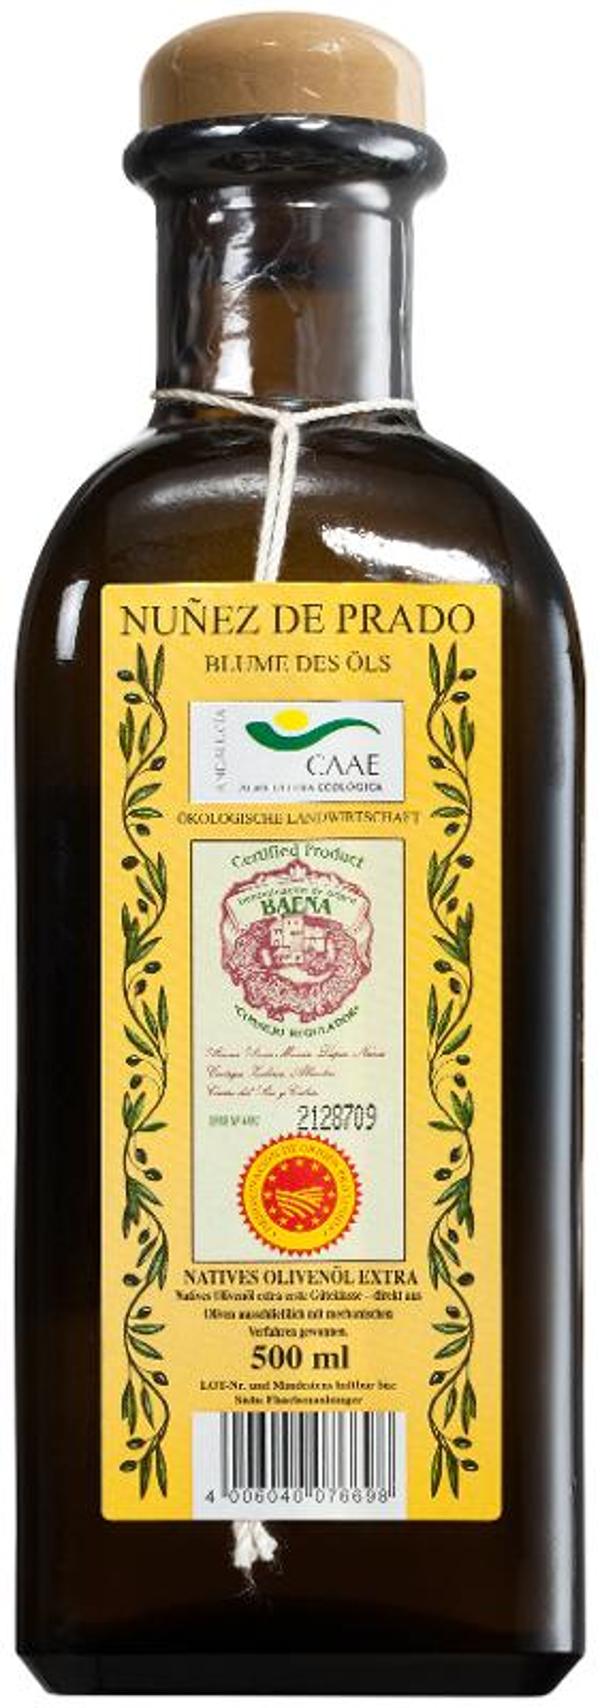 Produktfoto zu Olivenöl "Blume des Öls" 500ml nativ extra